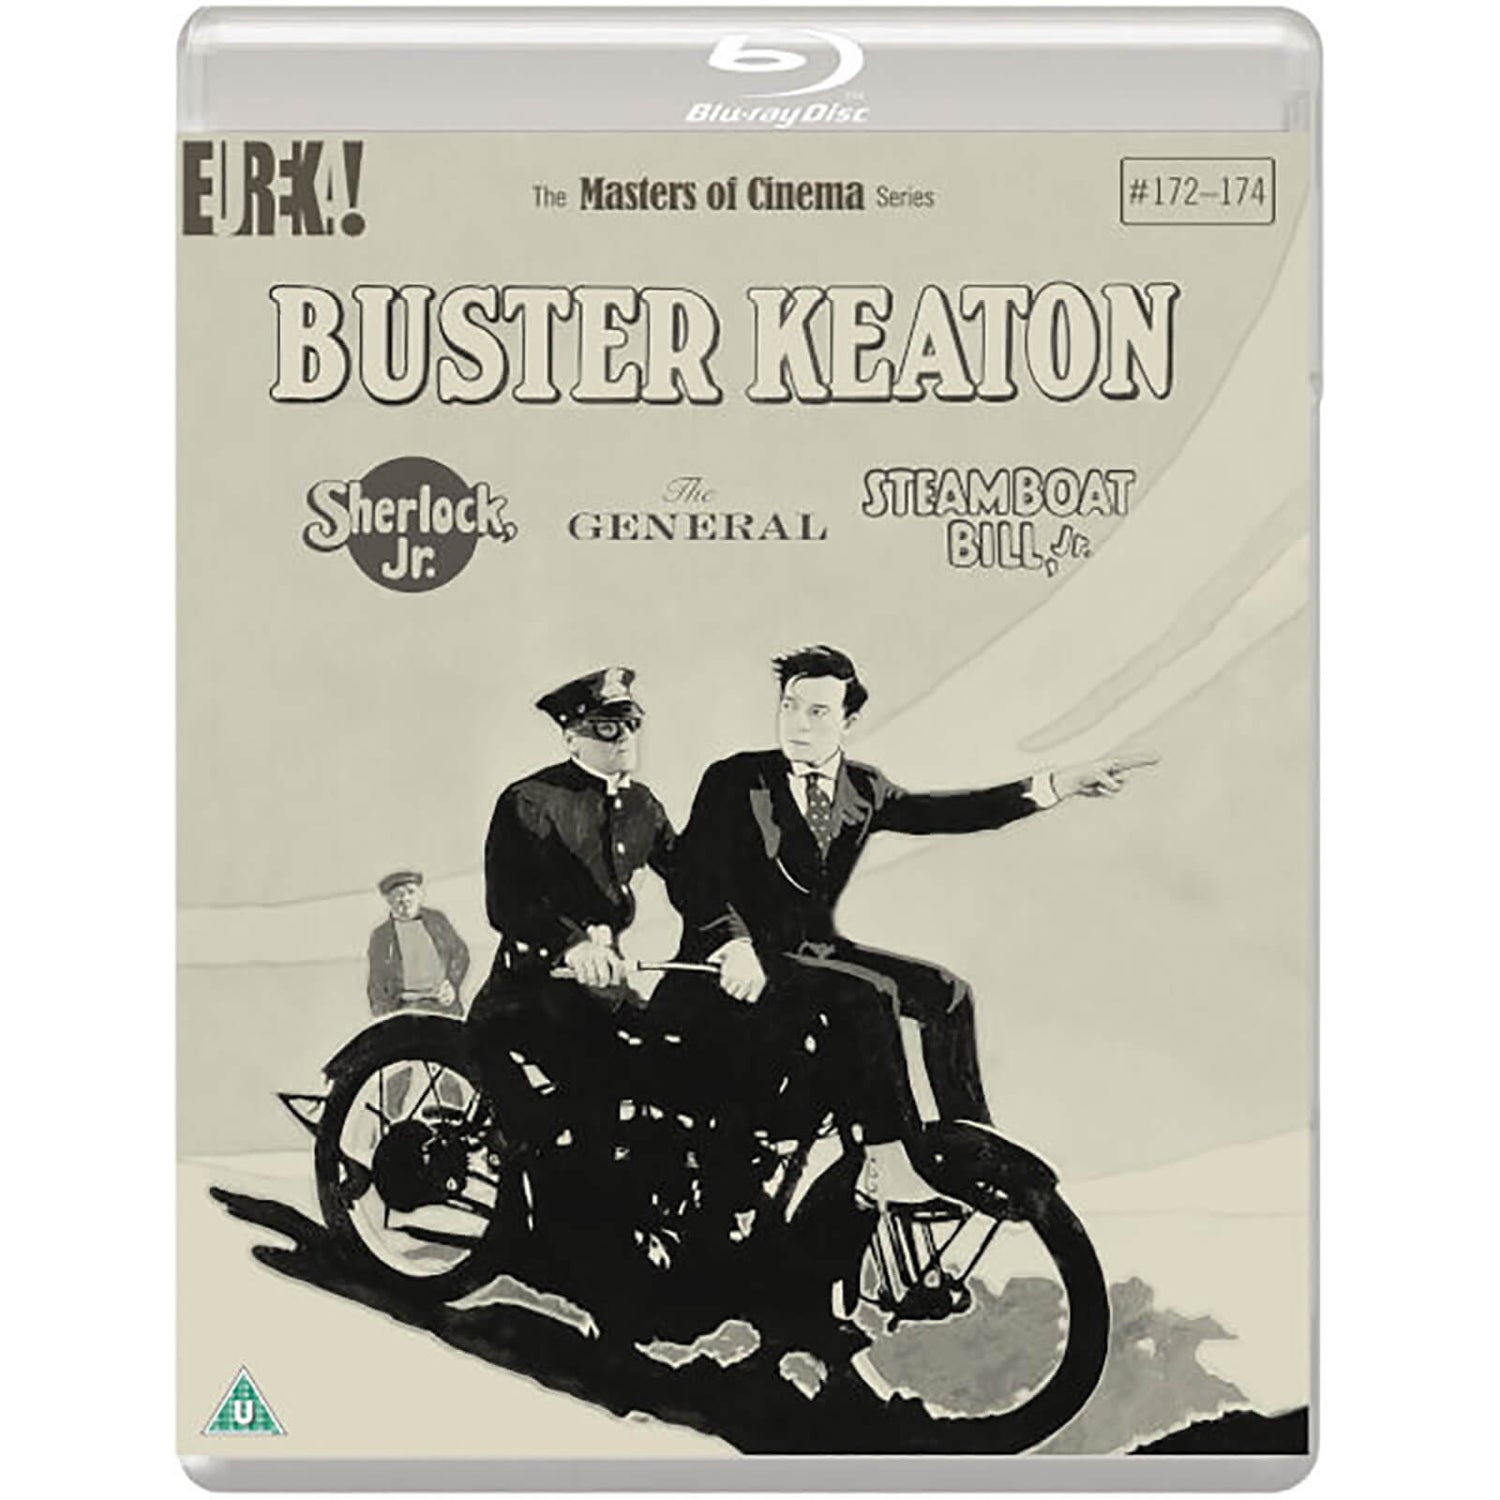 Buster Keaton: 3 Films (Sherlock, Jr., The General, Steamboat Bill, Jr.) [Masters Of Cinema] Limited Edition Blu-Ray